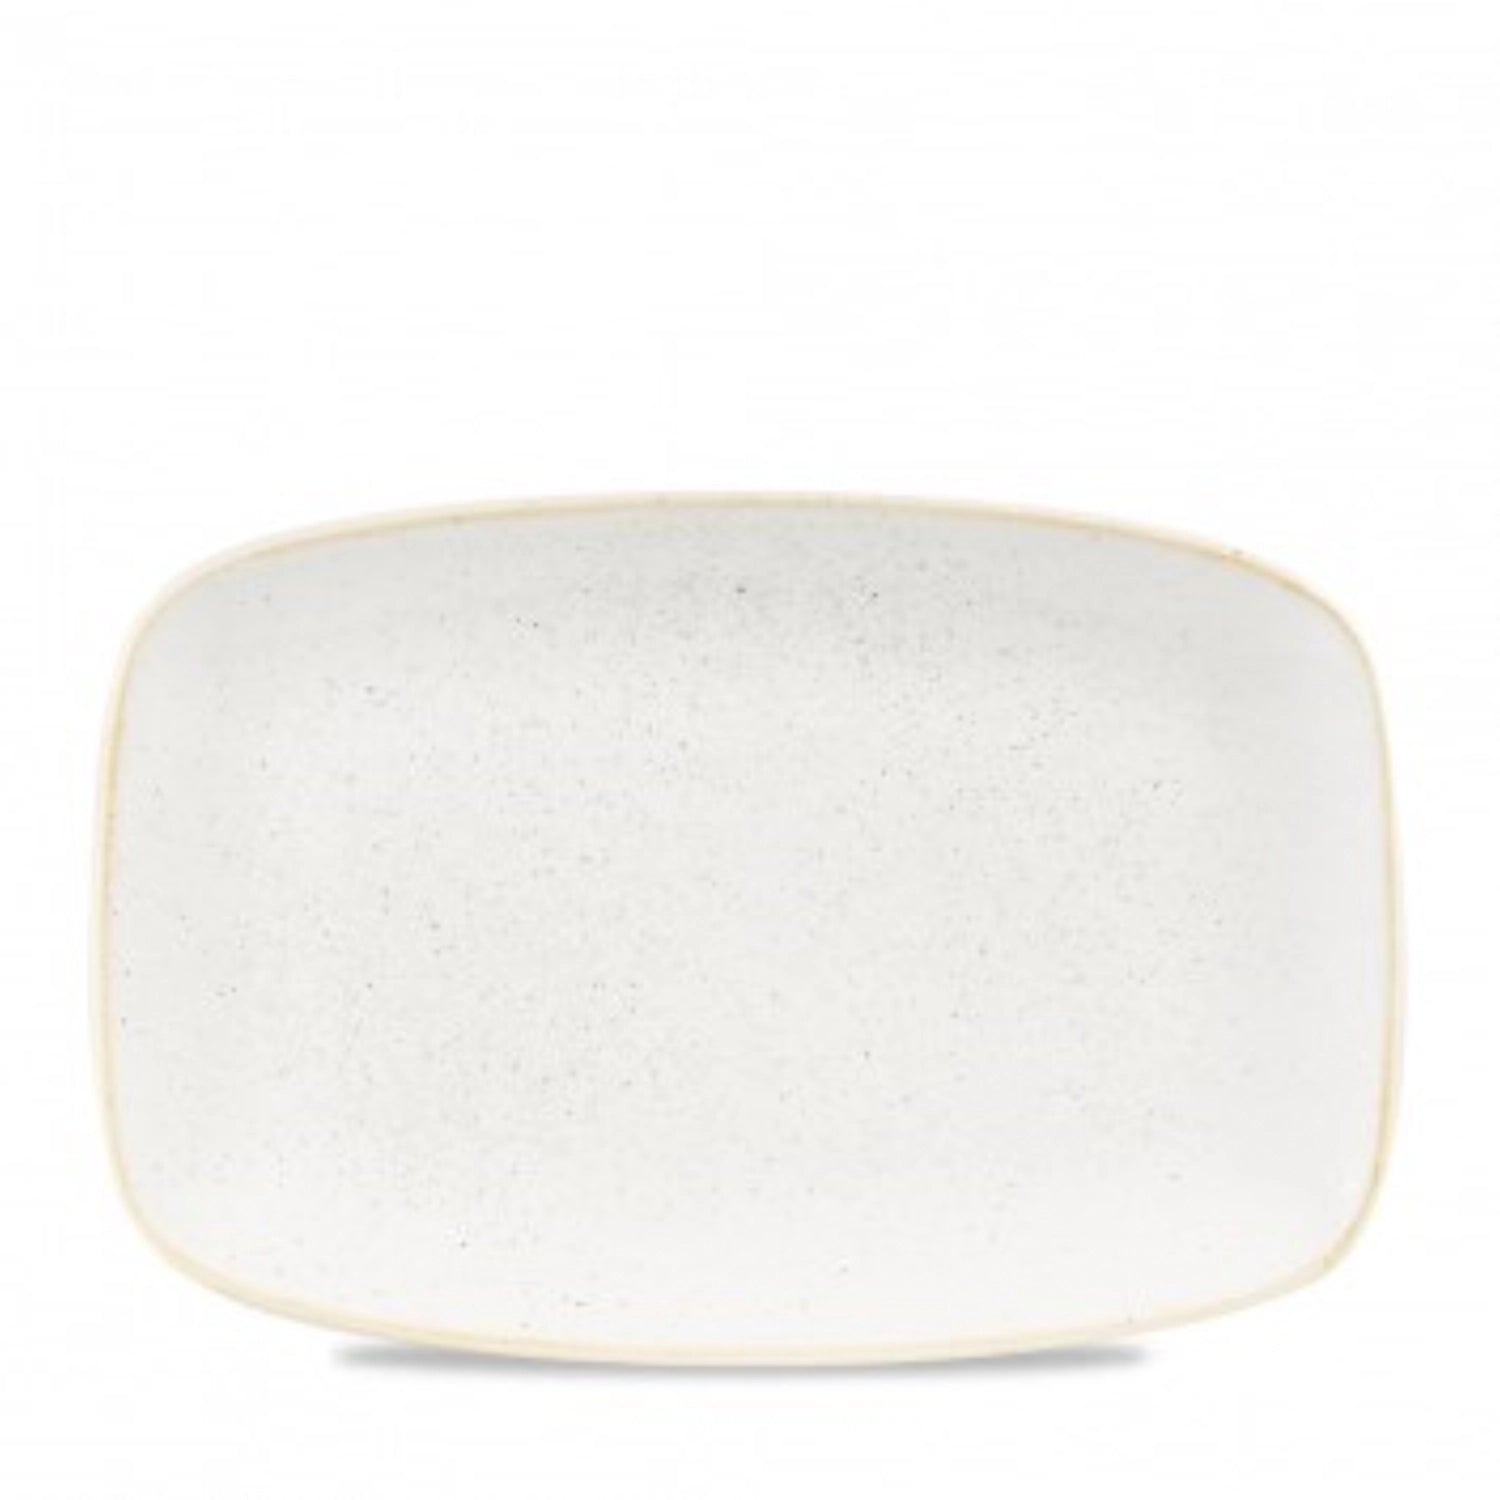 Stonecast Barley White Platte rechteckig No. 8 30x19.9cm - KAQTU Design